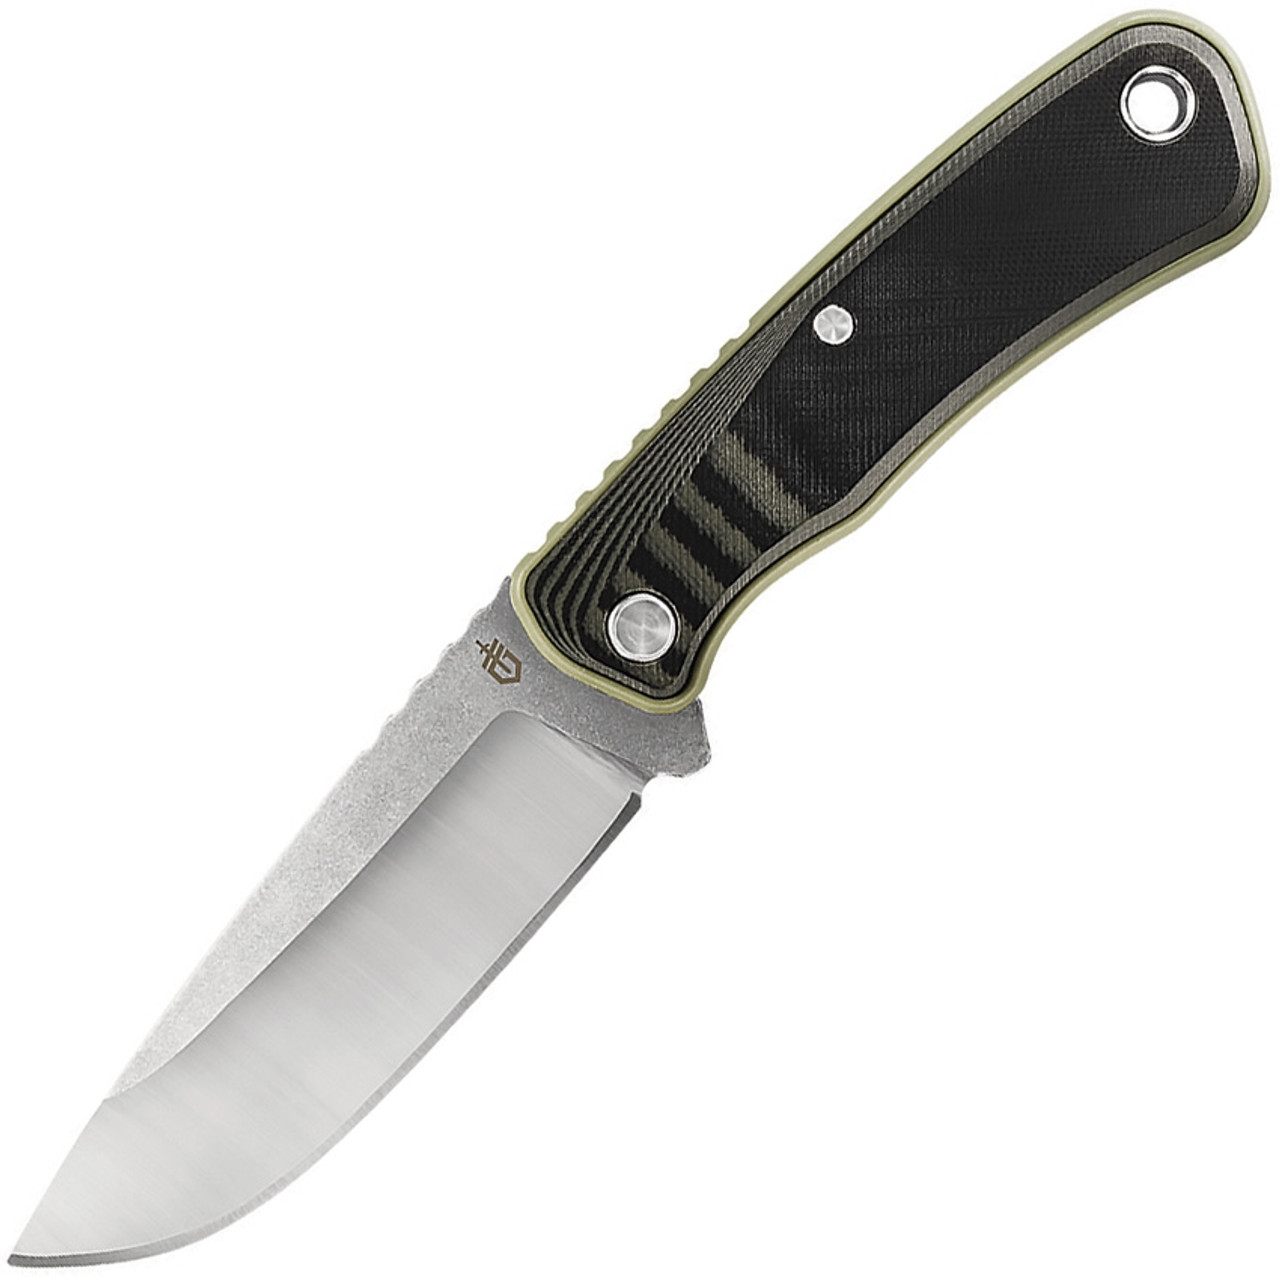 Gerber Downwind Caper G1818, 4.25" 7Cr17MoV Stonewashed Blade, Black & Green G-10 Handles